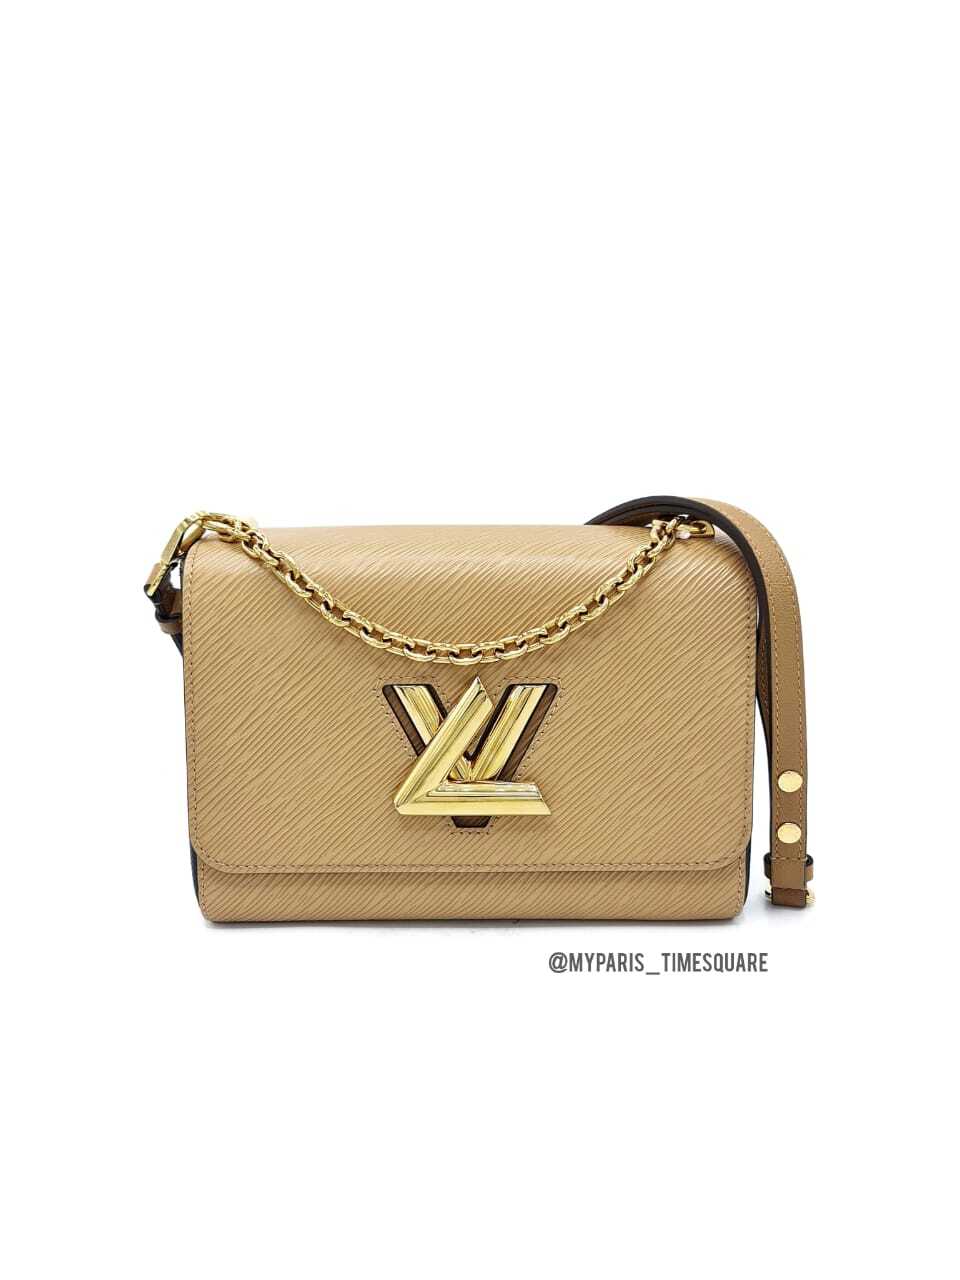 Authentic Louis Vuitton Camel Epi Leather Twist MM Bag for Sale in